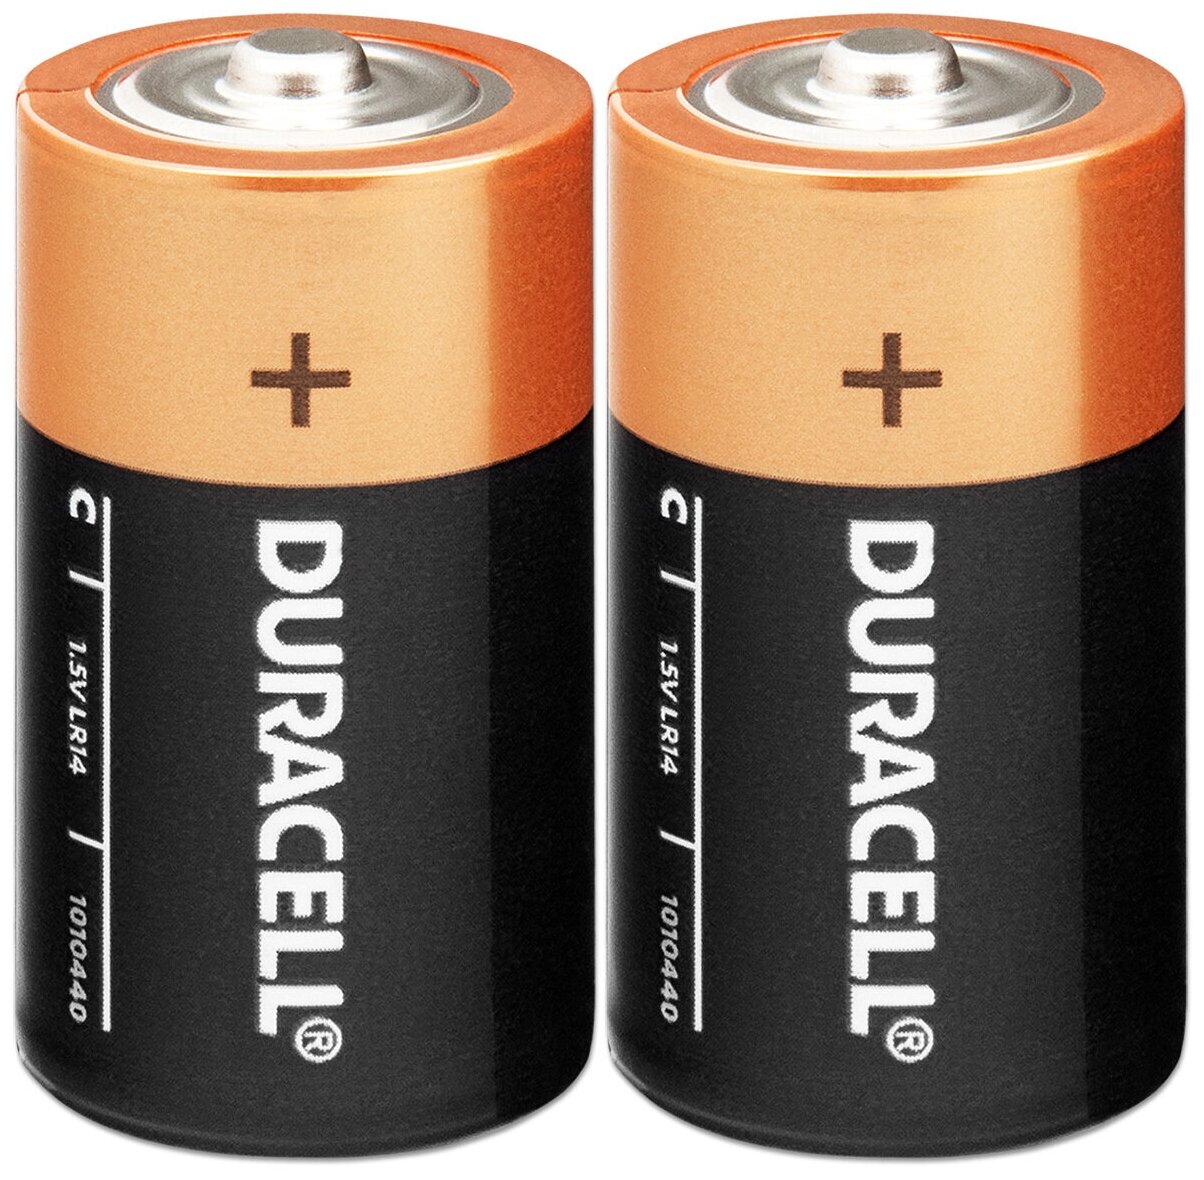 Duracell Батарейка алкалиновая Duracell Basic, C, LR14-2BL, 1.5В, блистер, 2 шт.